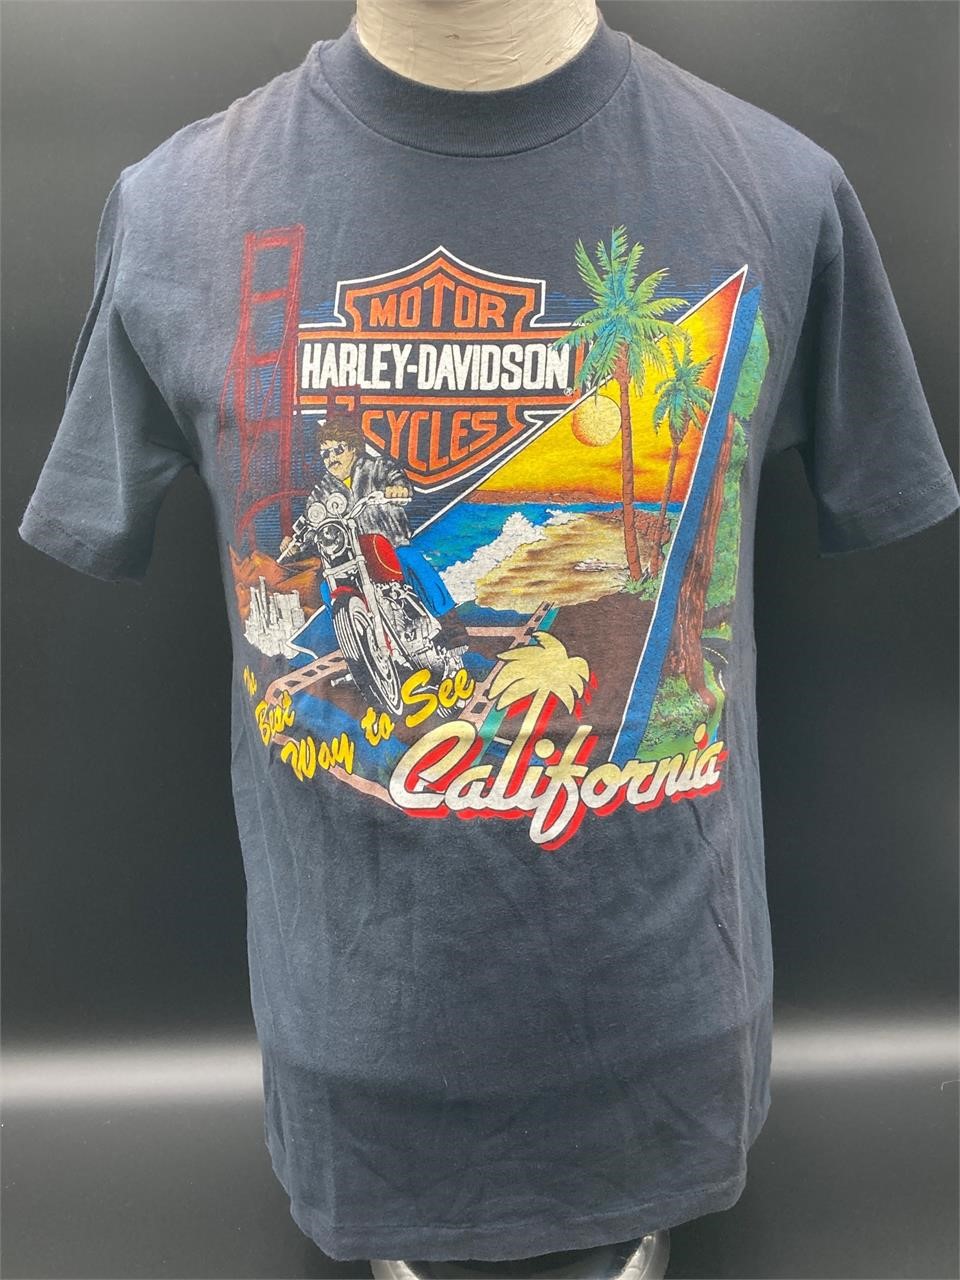 Vintage Harley Davidson Apparel & T-Shirt Auction